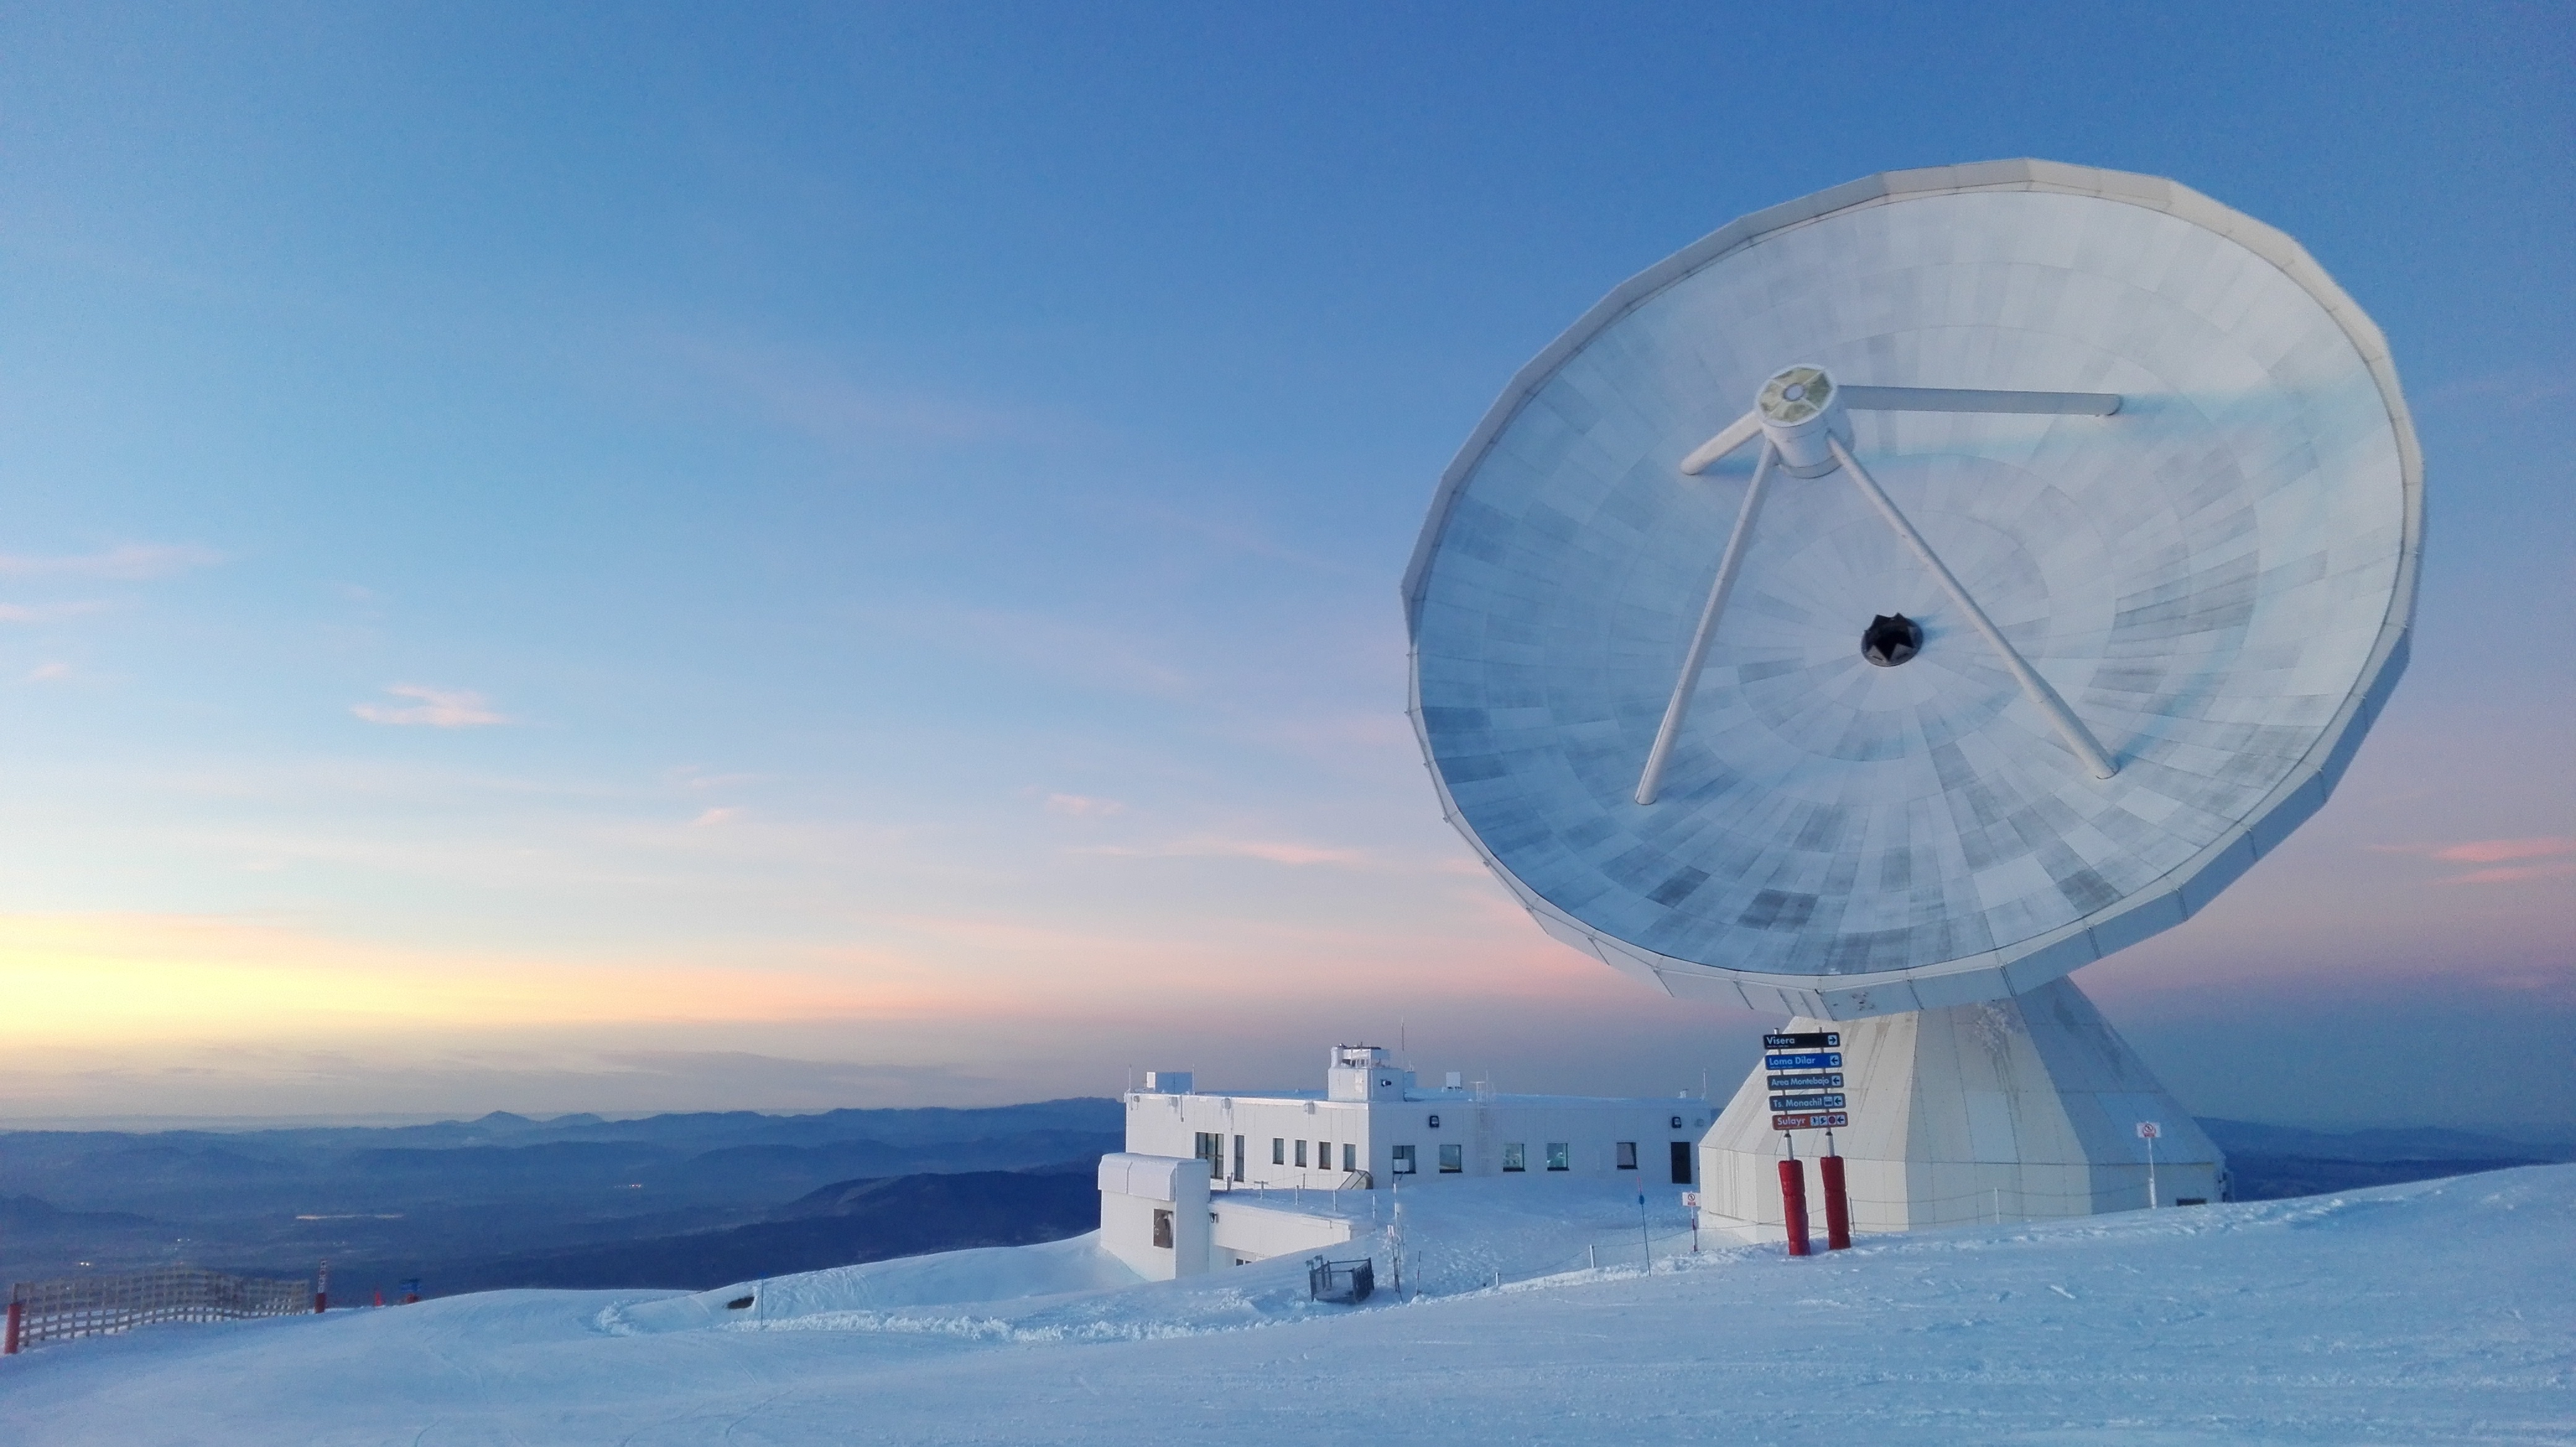 IRAM 30 m telescope